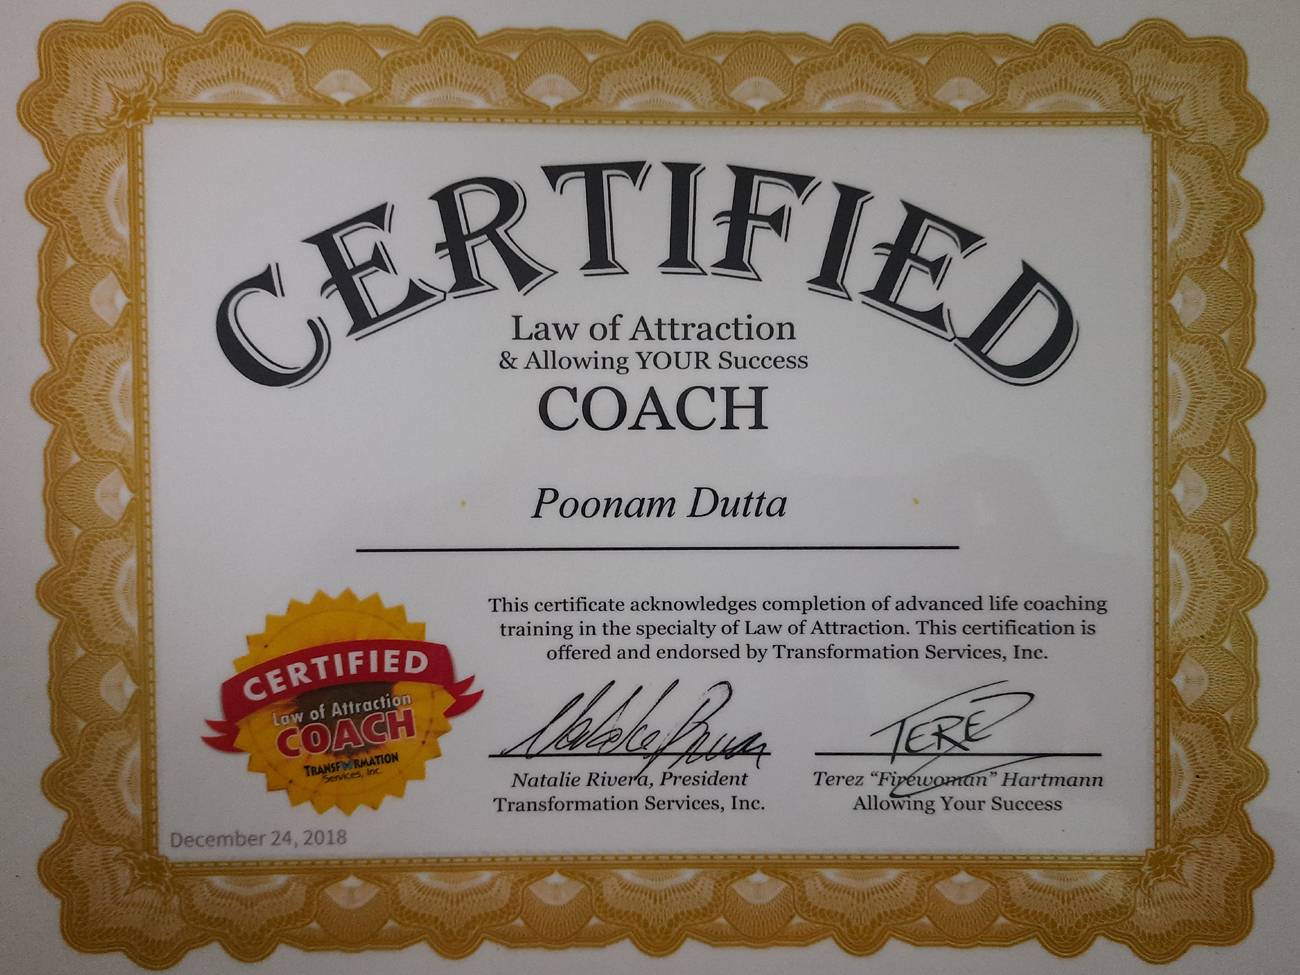 Poonam Dutta law of attraction coach